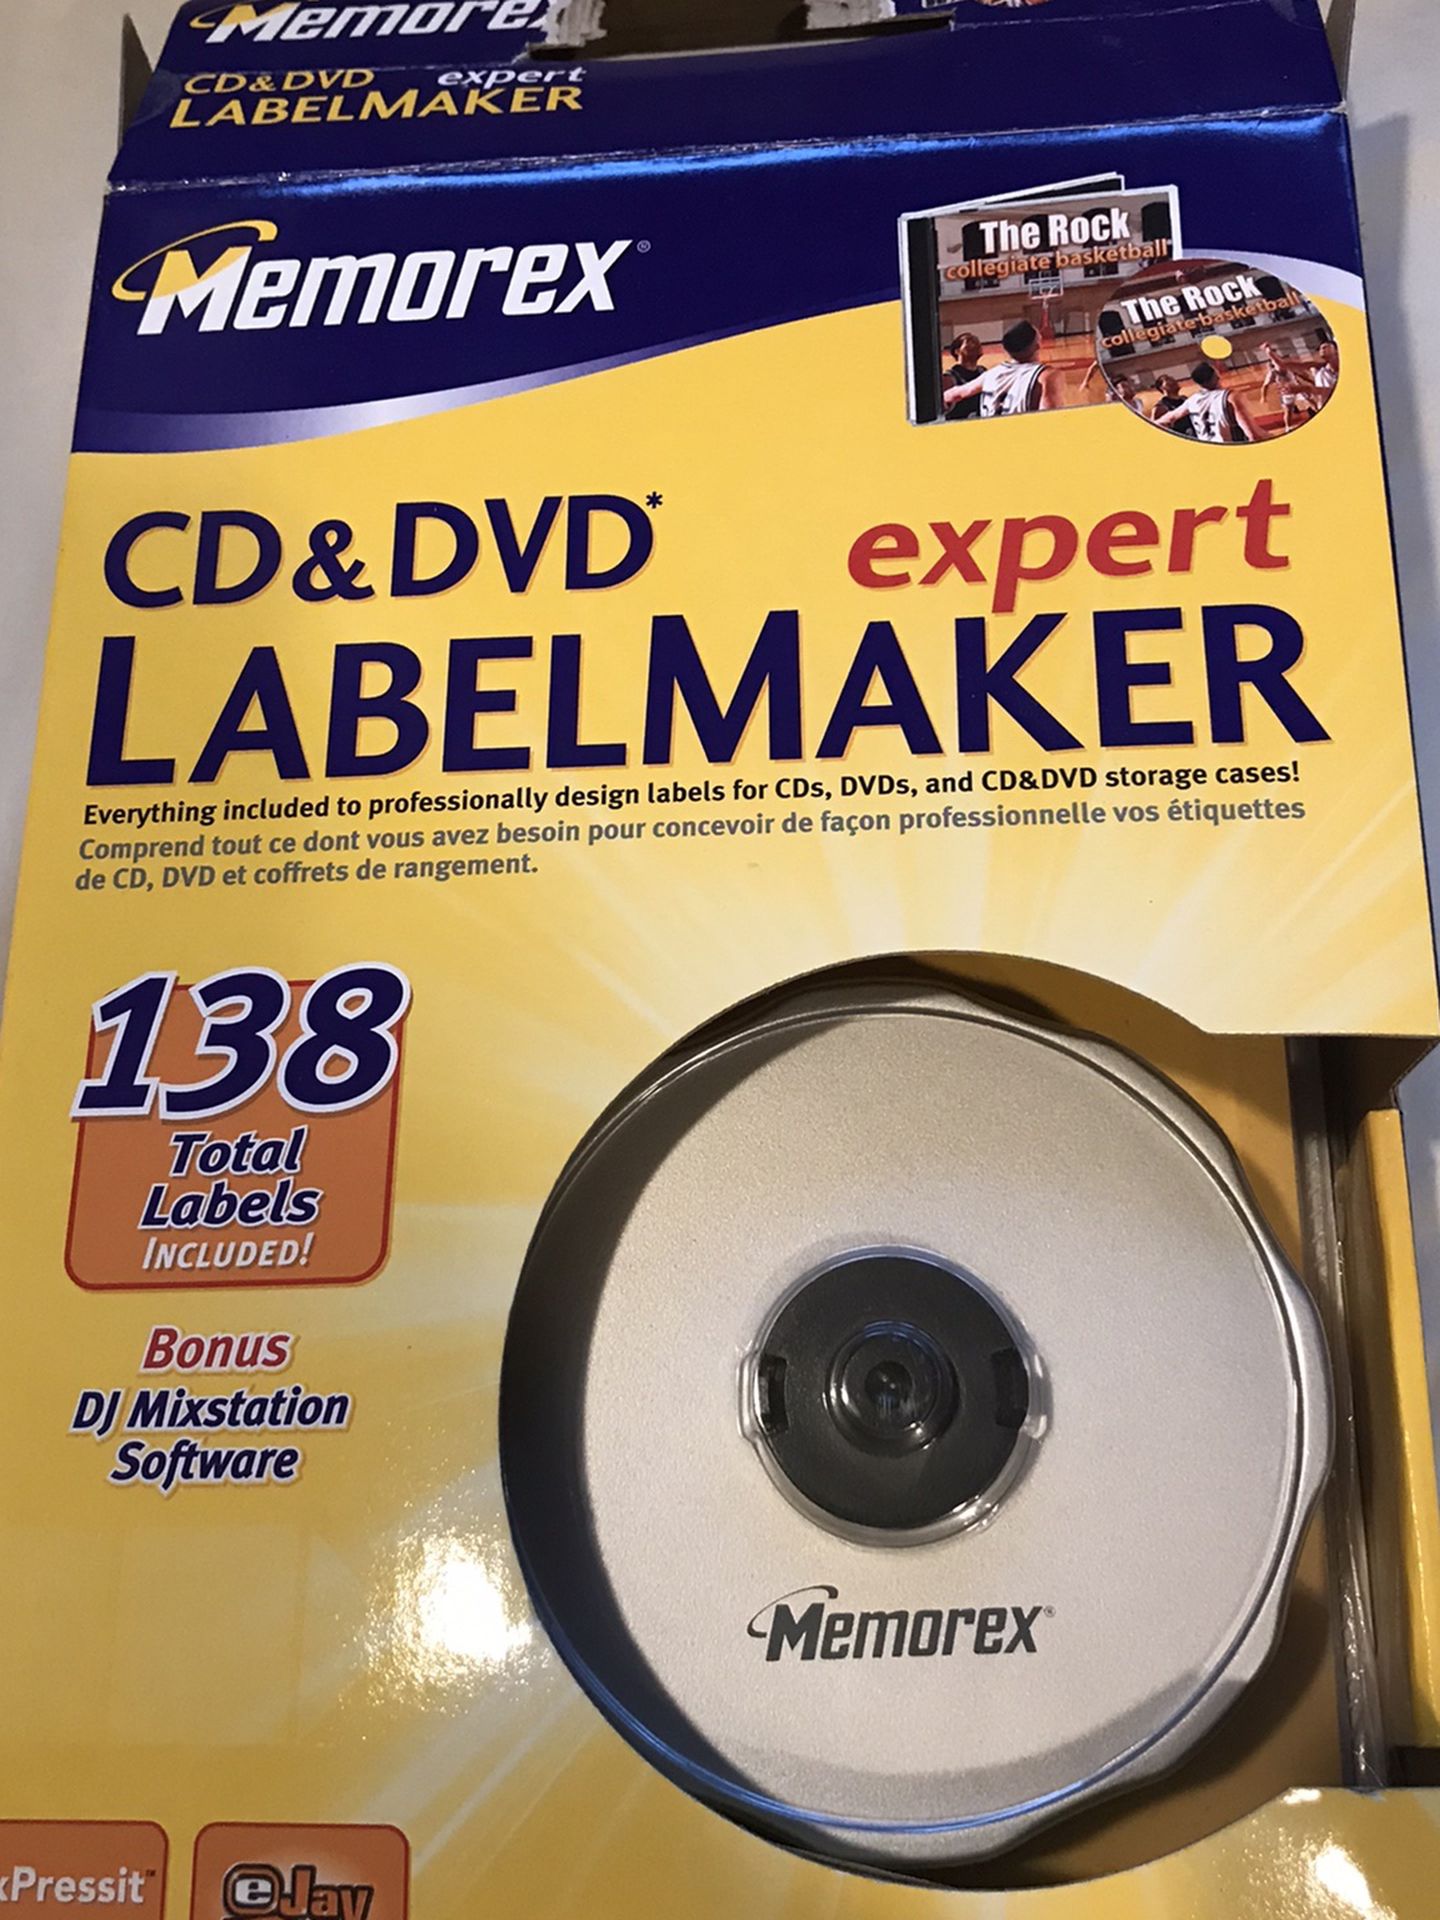 Memorex CD And DVD Expert Labelmaker